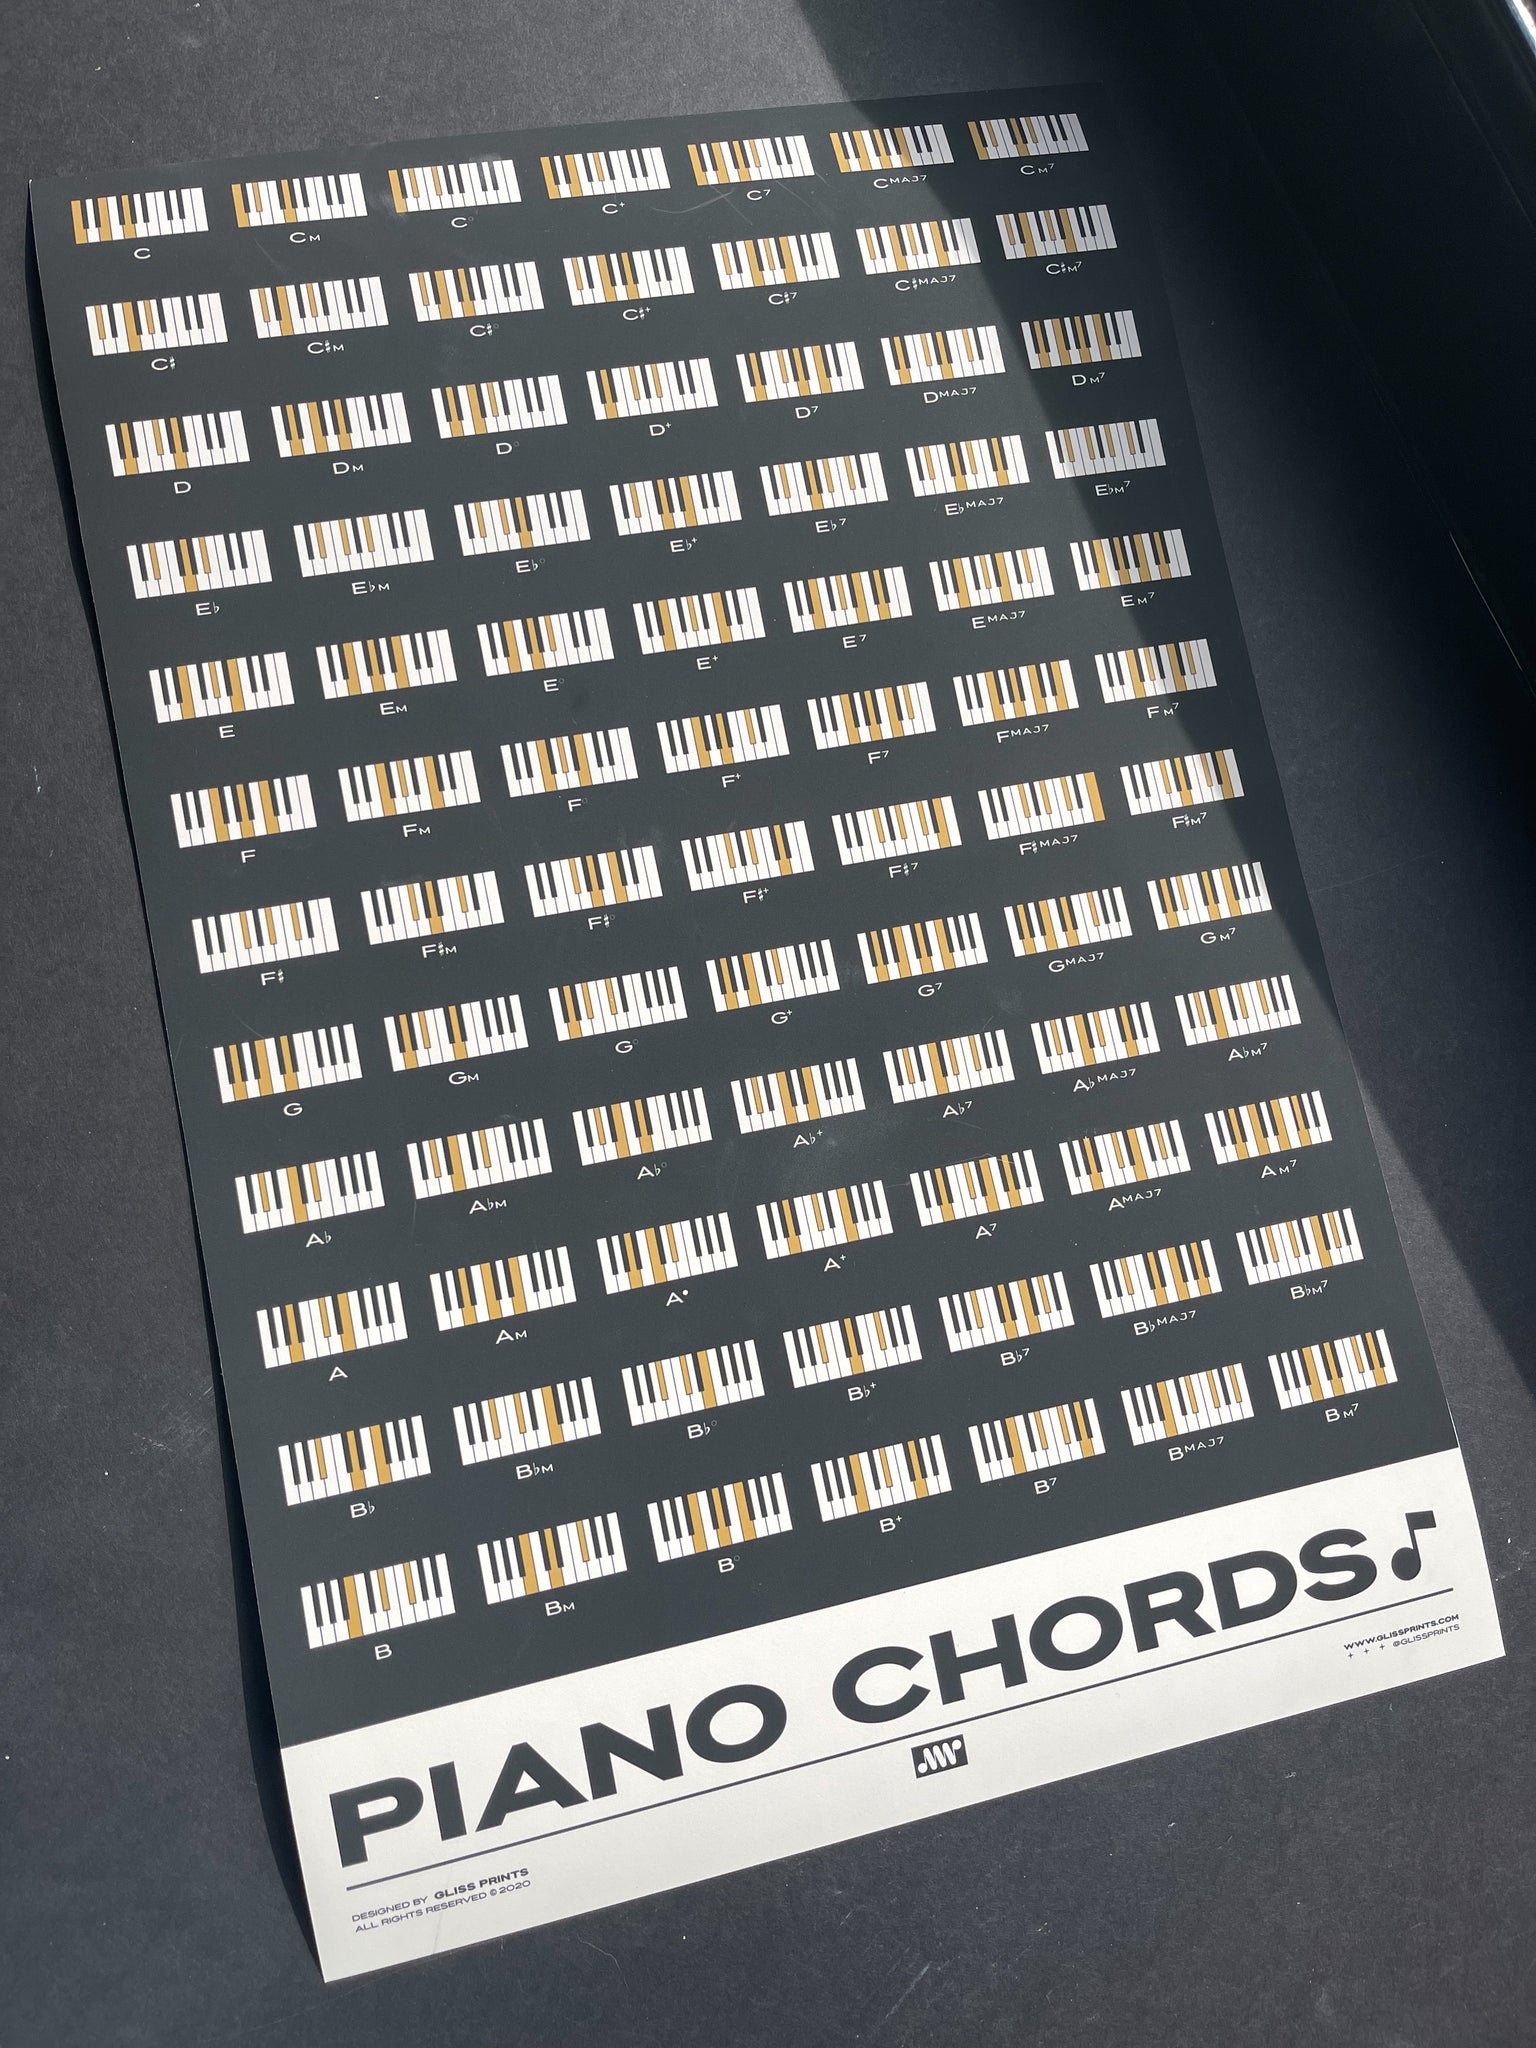 Piano Chords Chart, Black